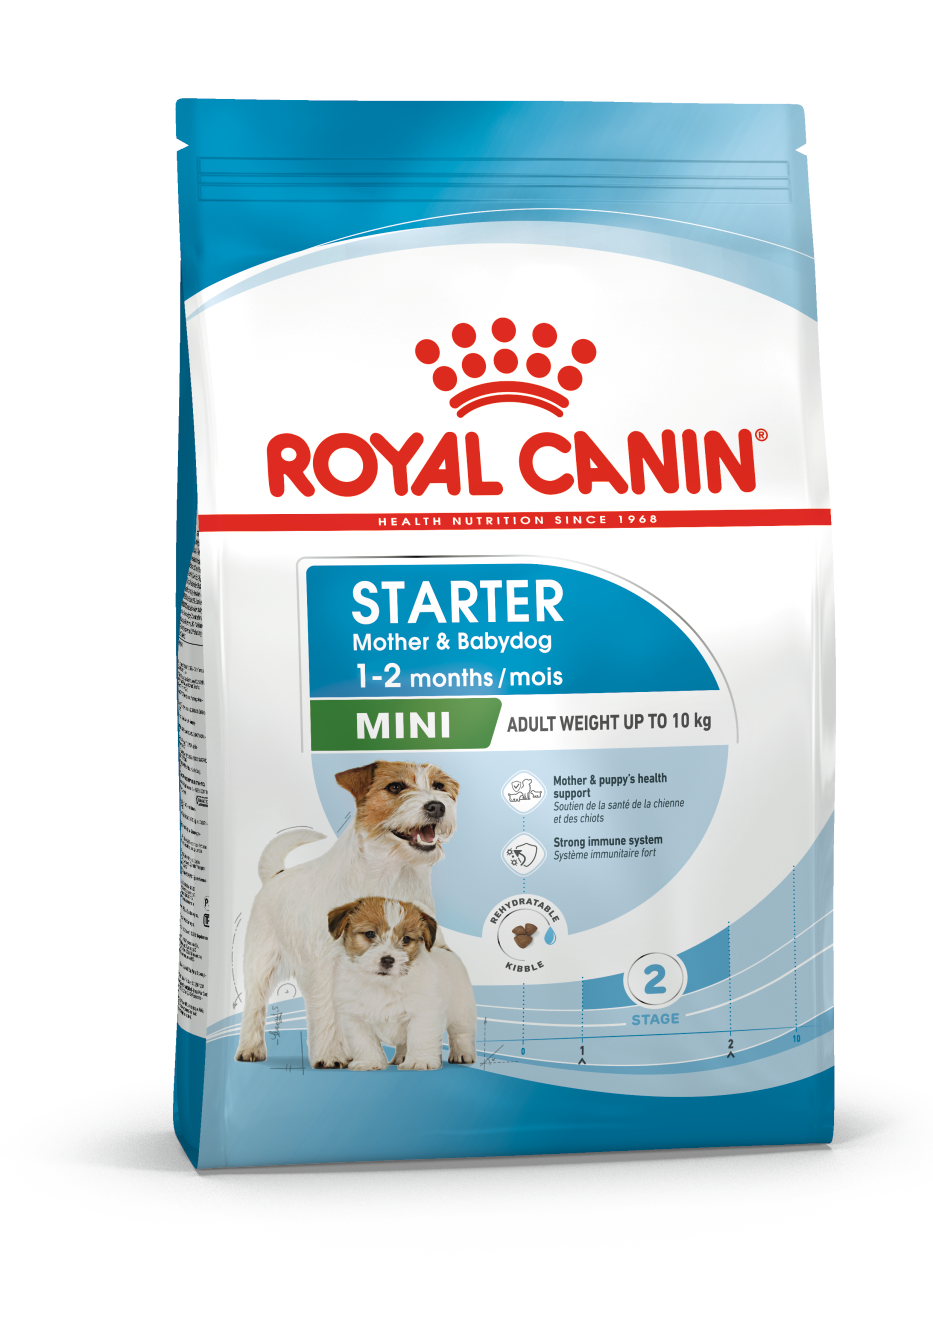 Packshot Royal Canin Starter Mother & Babydog Mini hondenvoeding